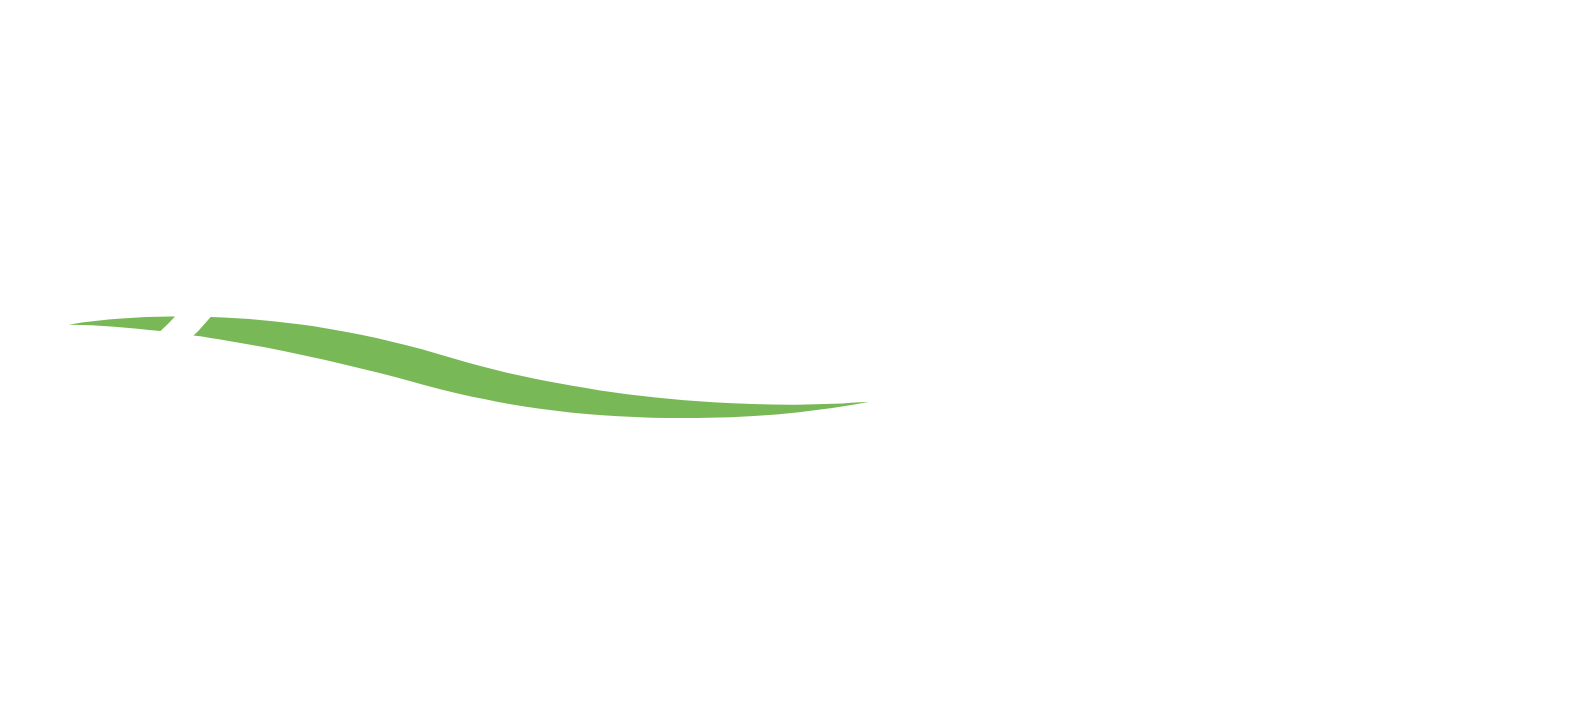 Energy Resources of Australia logo large for dark backgrounds (transparent PNG)